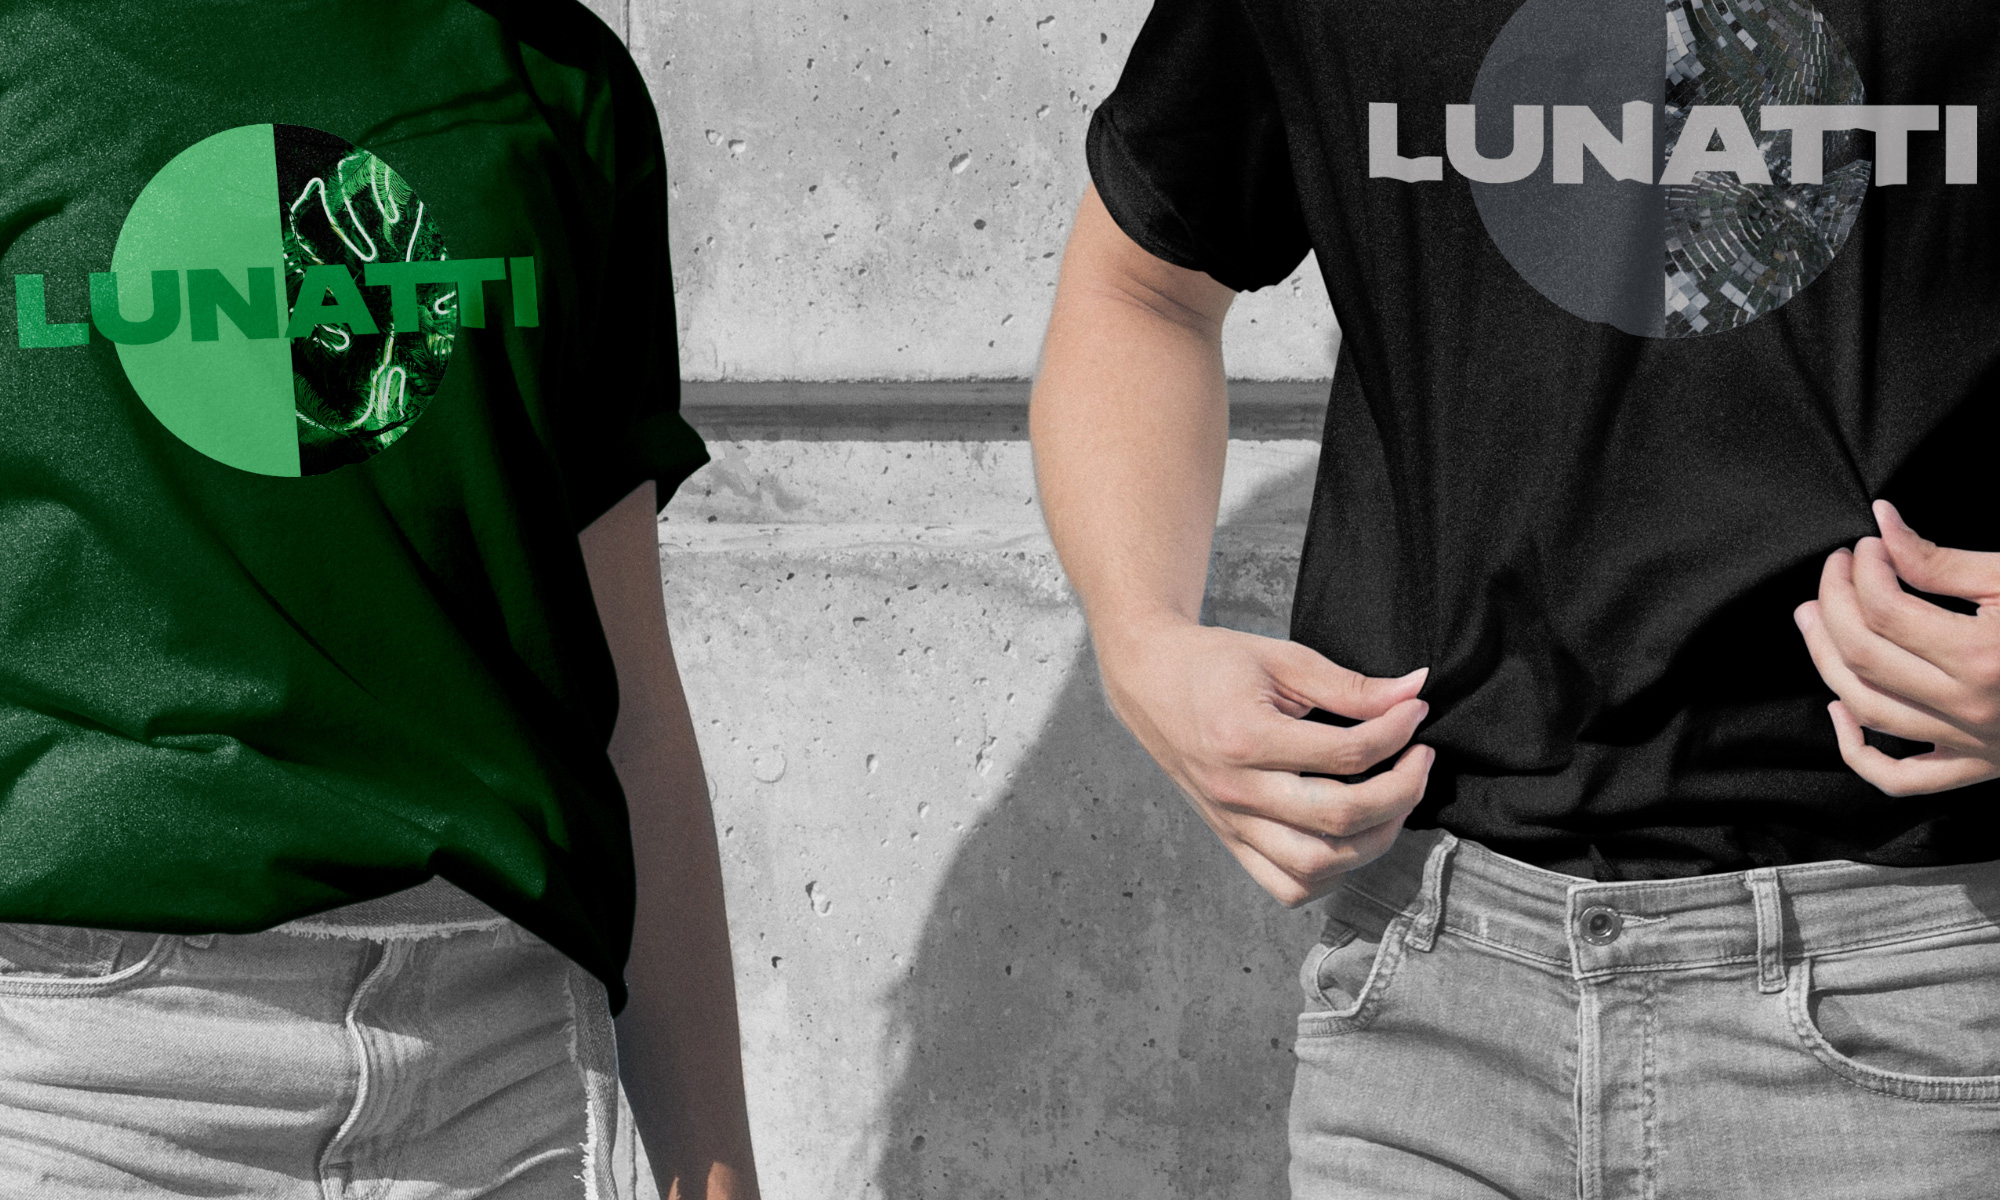 Lunatti tshirts